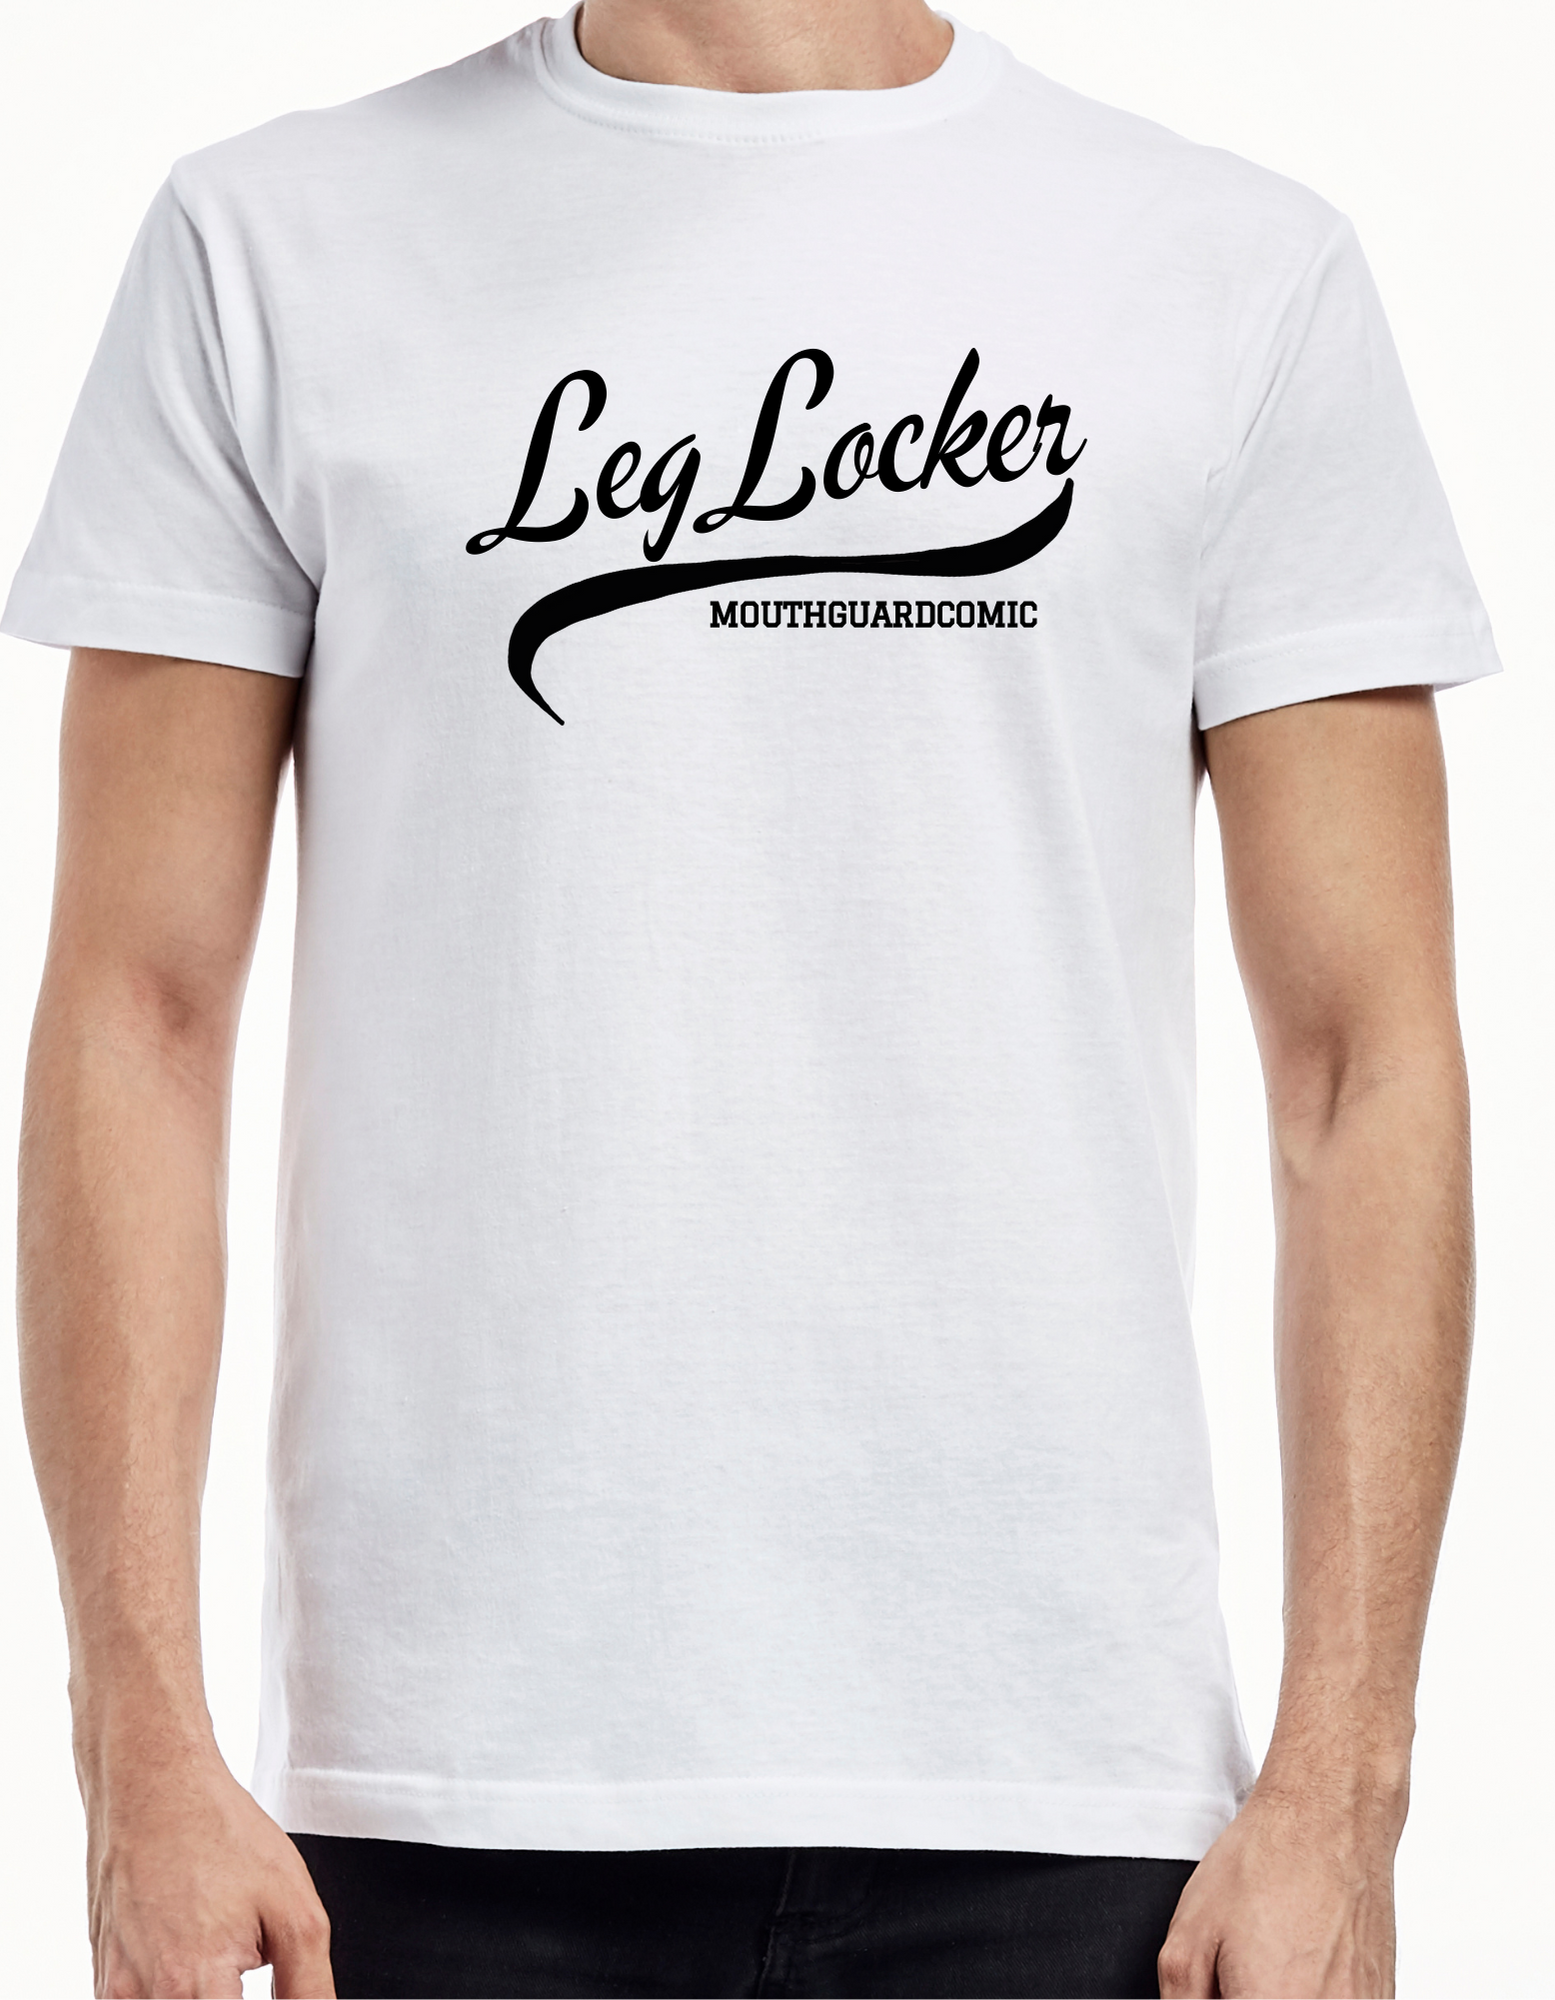 Leg Locker T-shirt